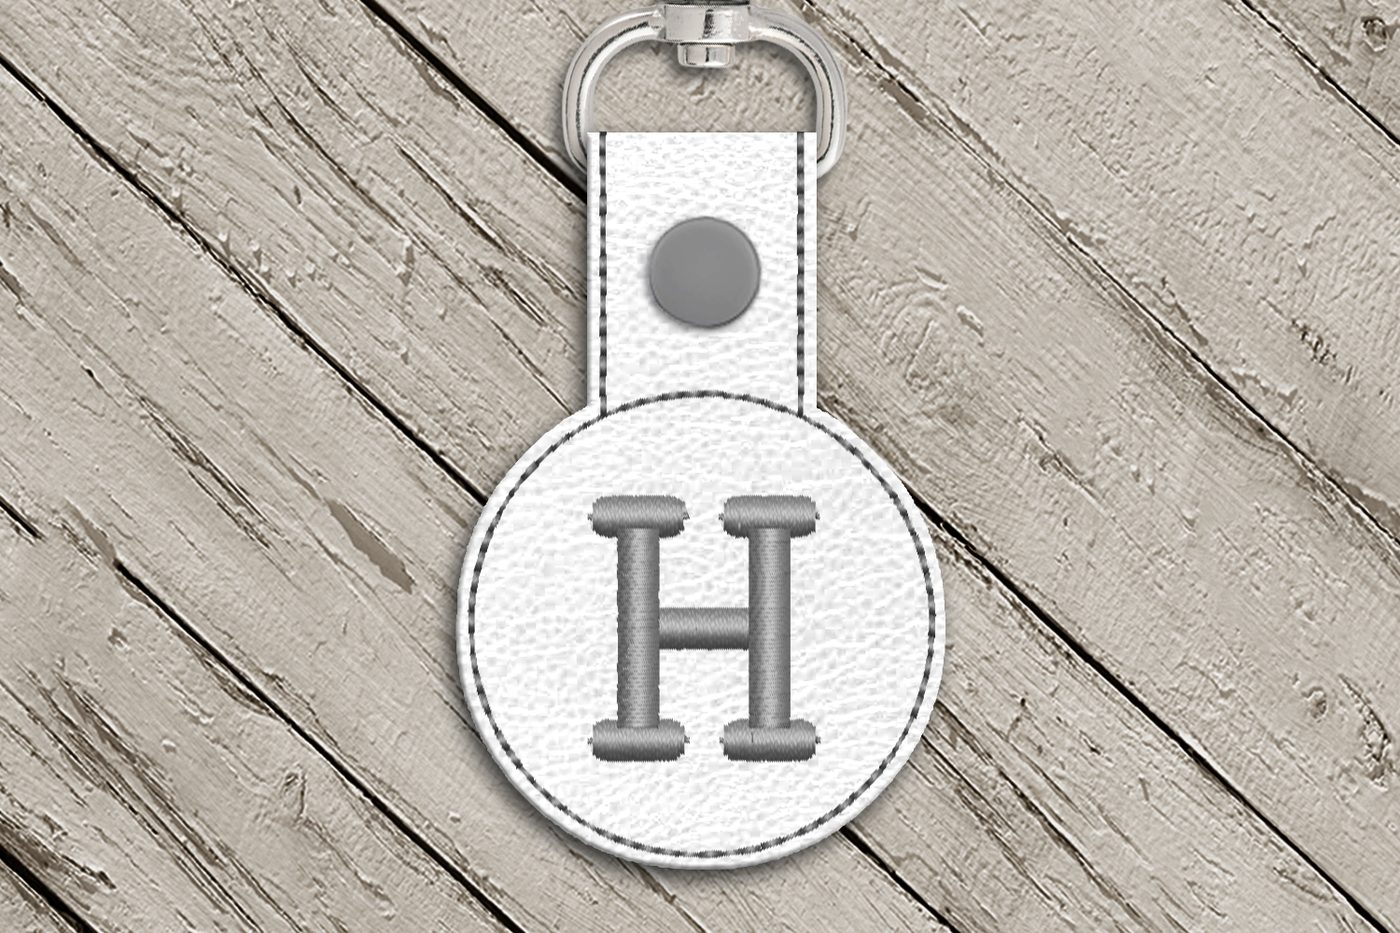 Letter H in the hoop key fob design